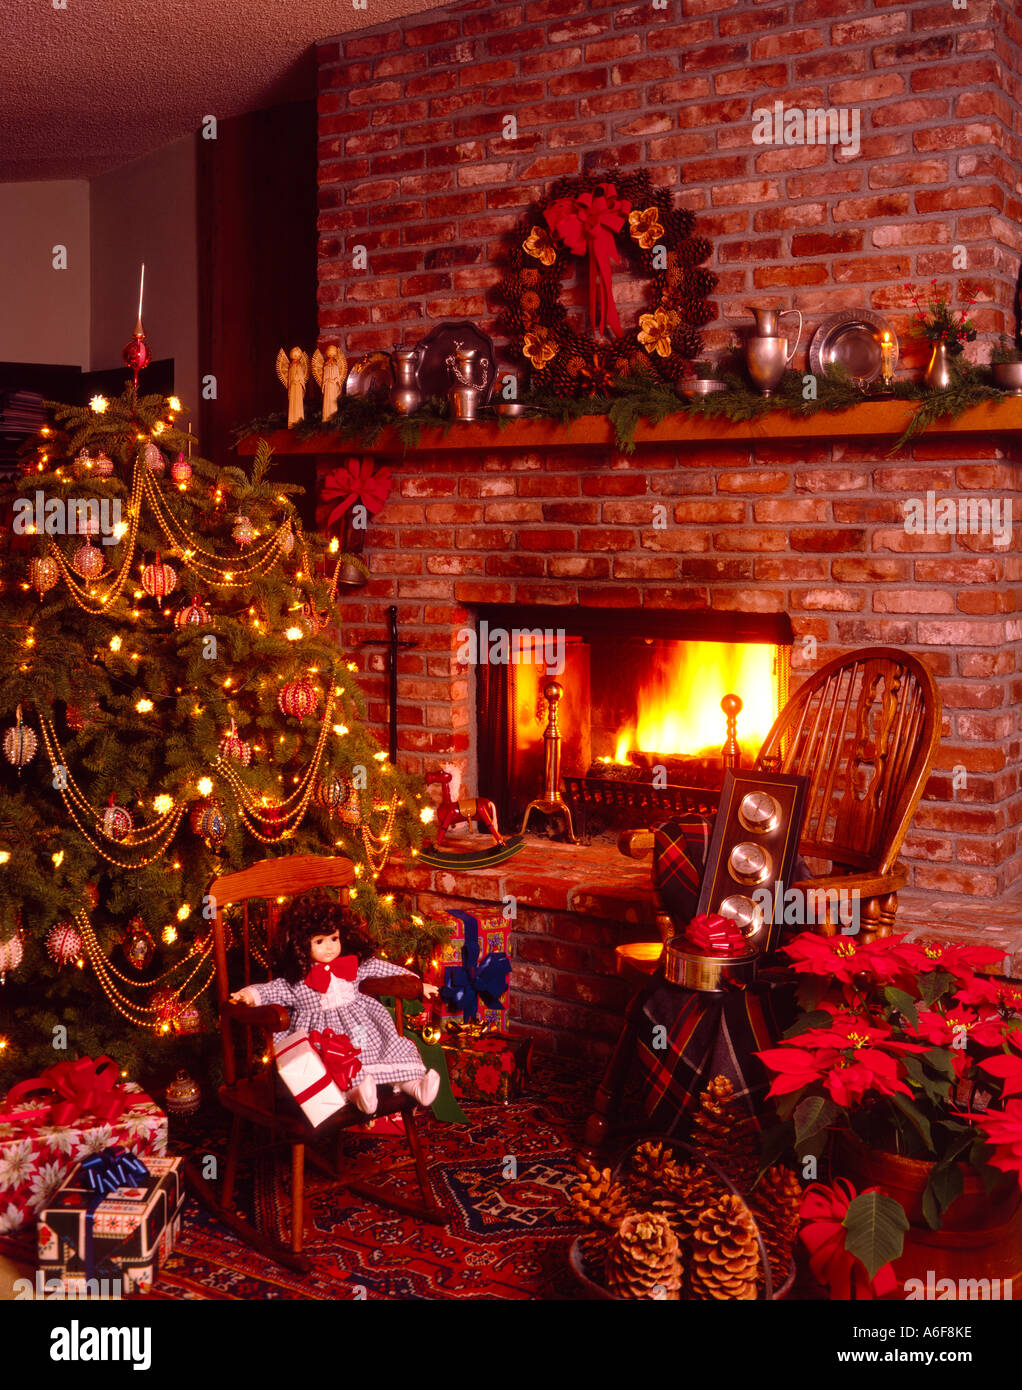 Christmas Fireplace Scene